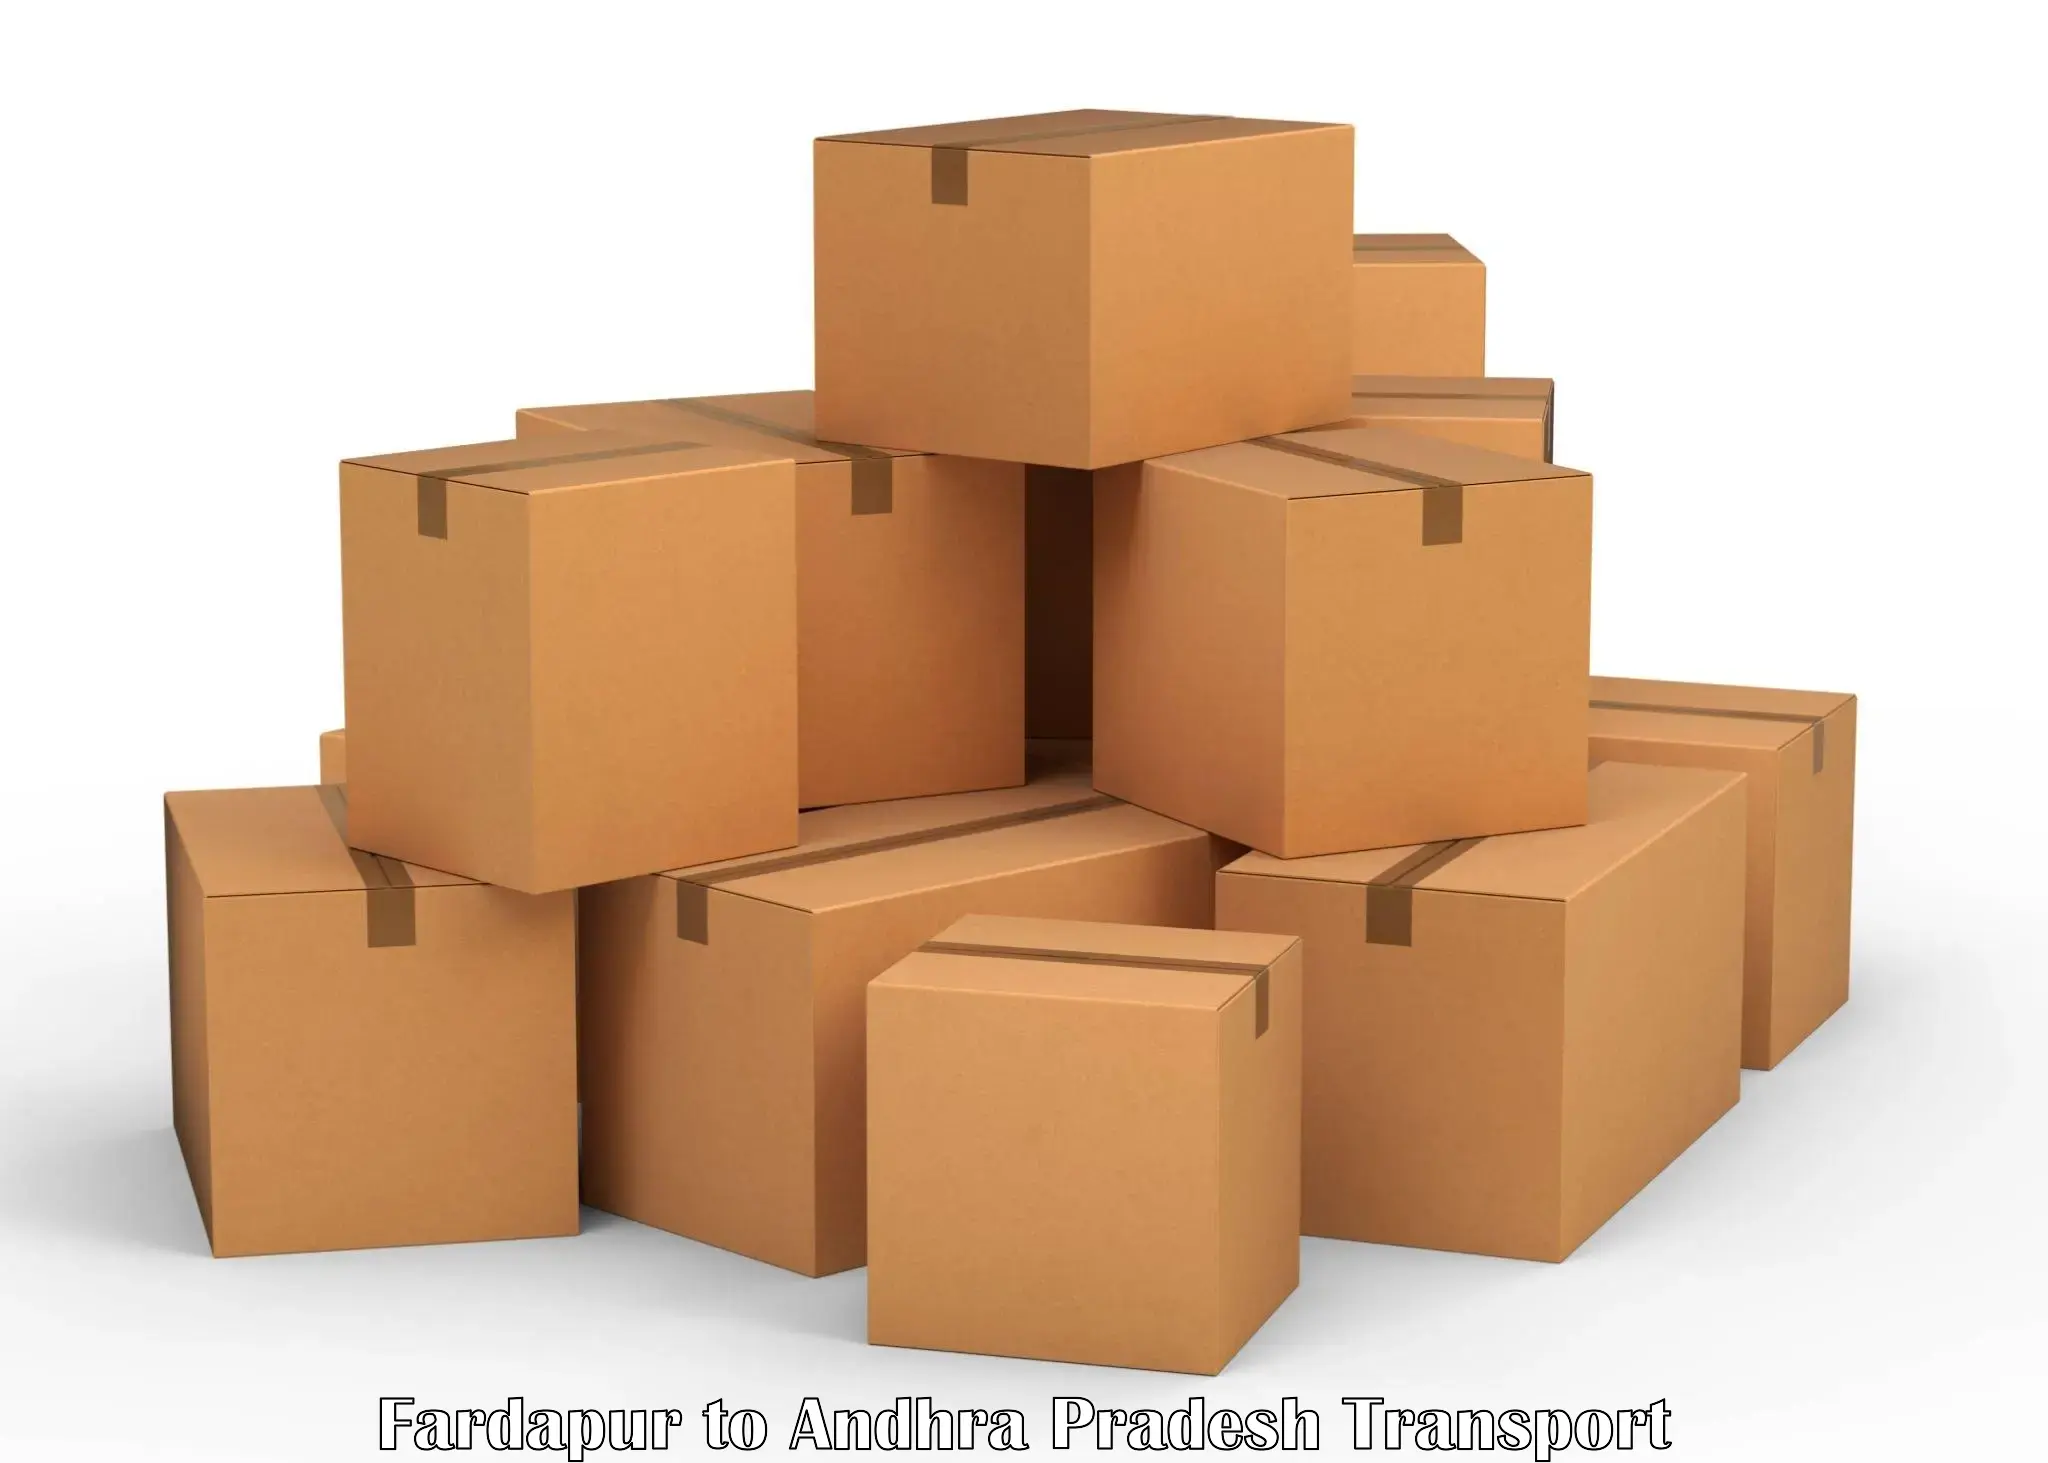 Furniture transport service Fardapur to Andhra Pradesh